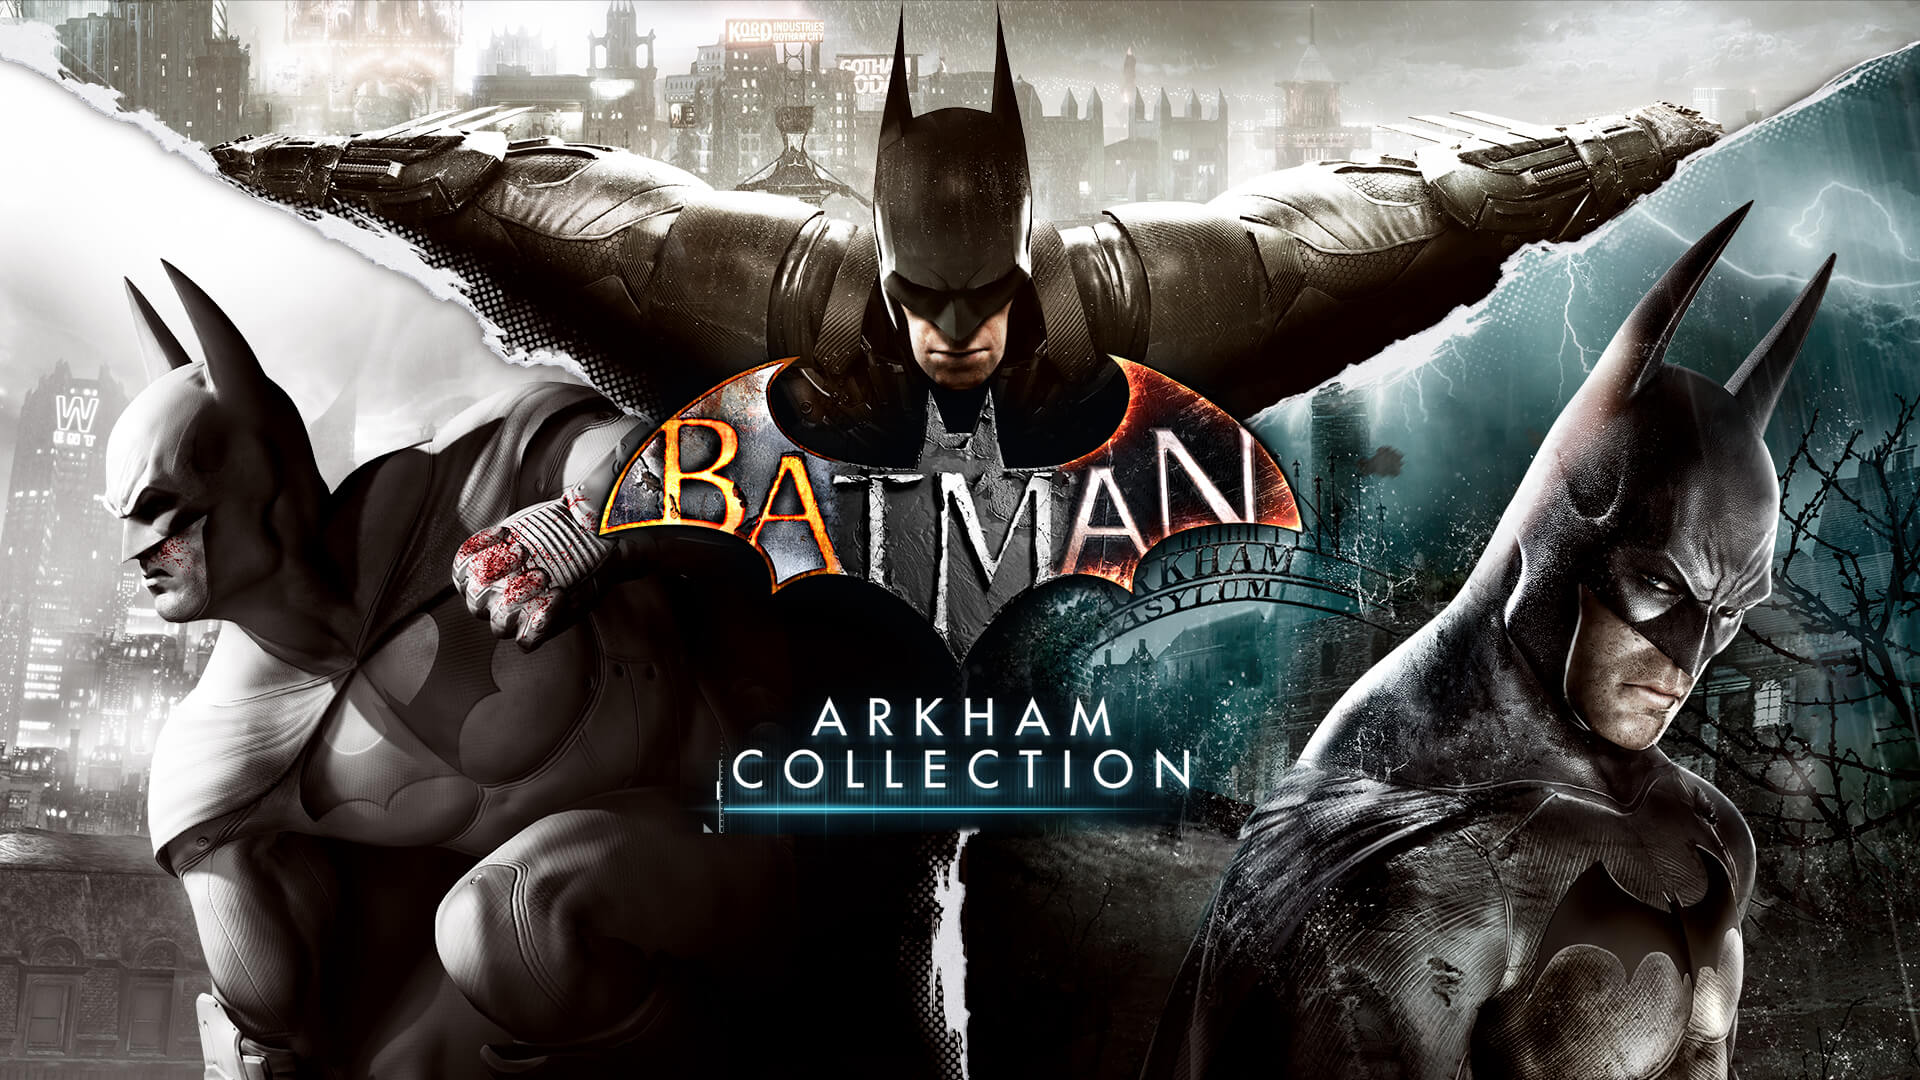 Epic Games memberikan Koleksi Batman Arkham (Suaka, Kota, Ksatria) dan Lego Batman Trilogy hingga 26 September